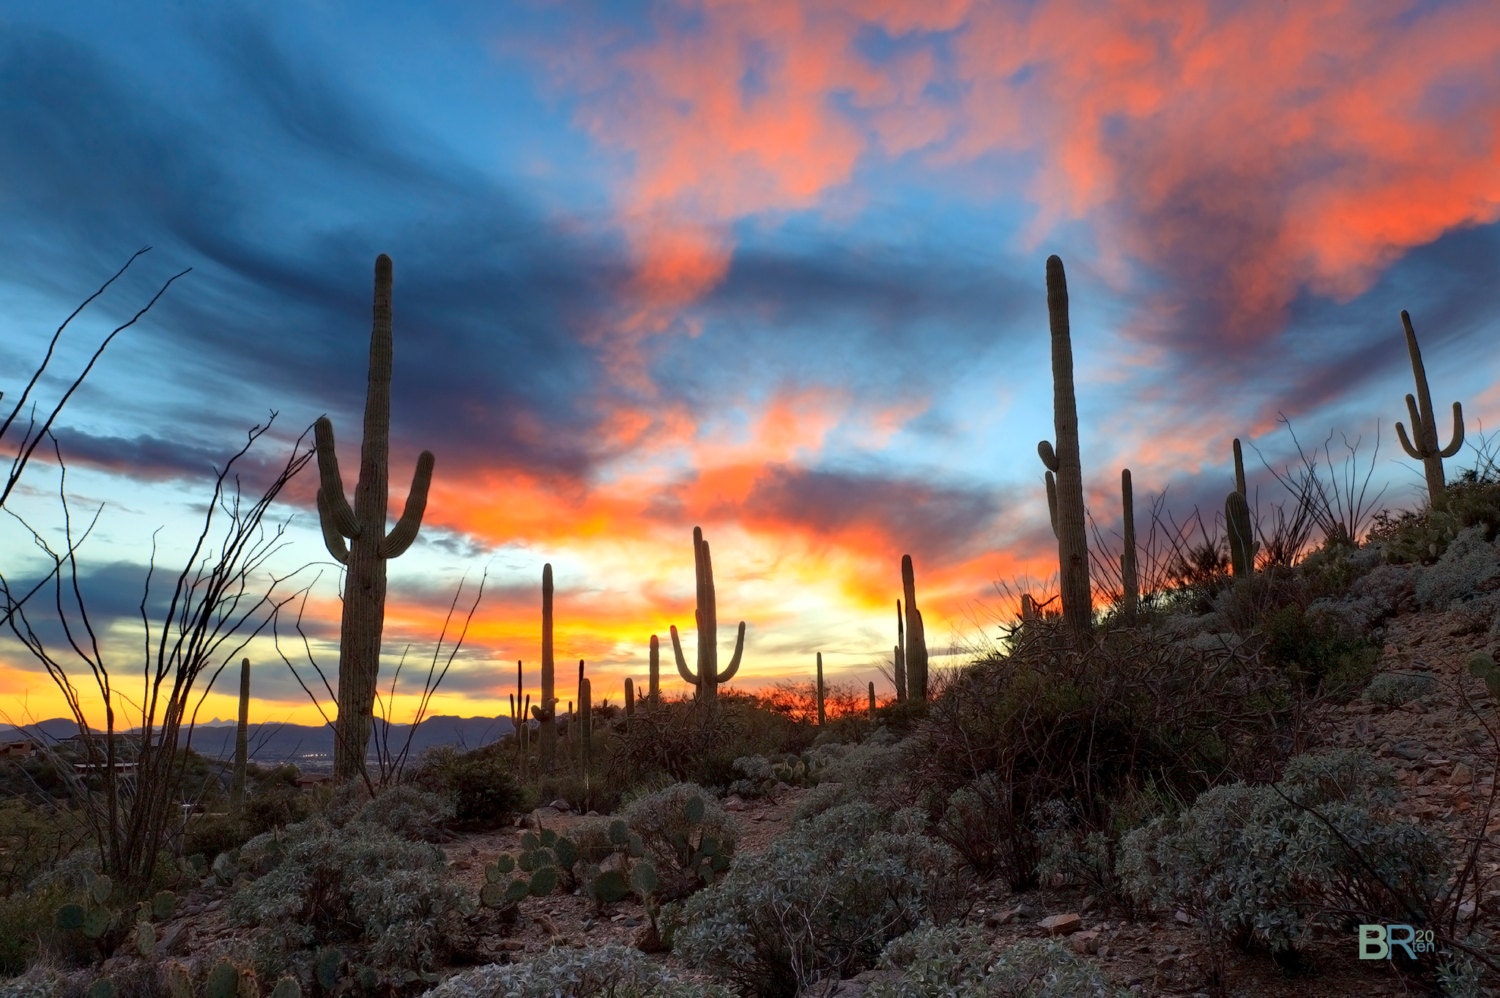 Saguaro Cactus in the Sonoran Desert at Sunset Photograph